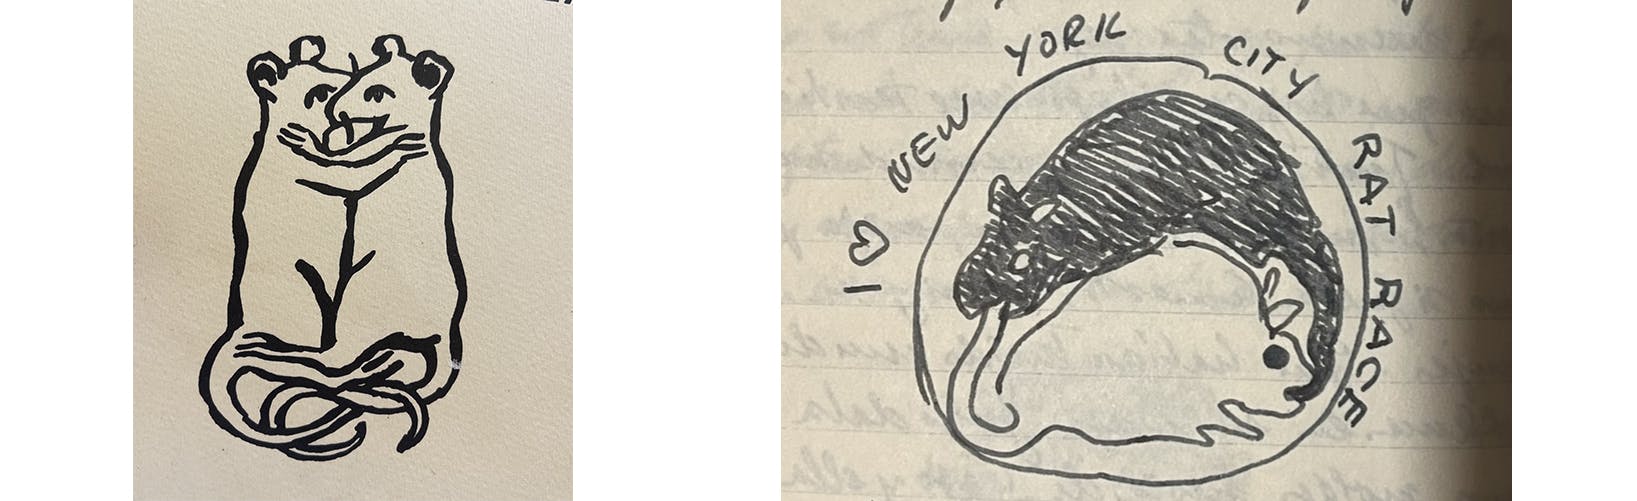 Rat drawings from Luis Frangella's notebooks, 1986